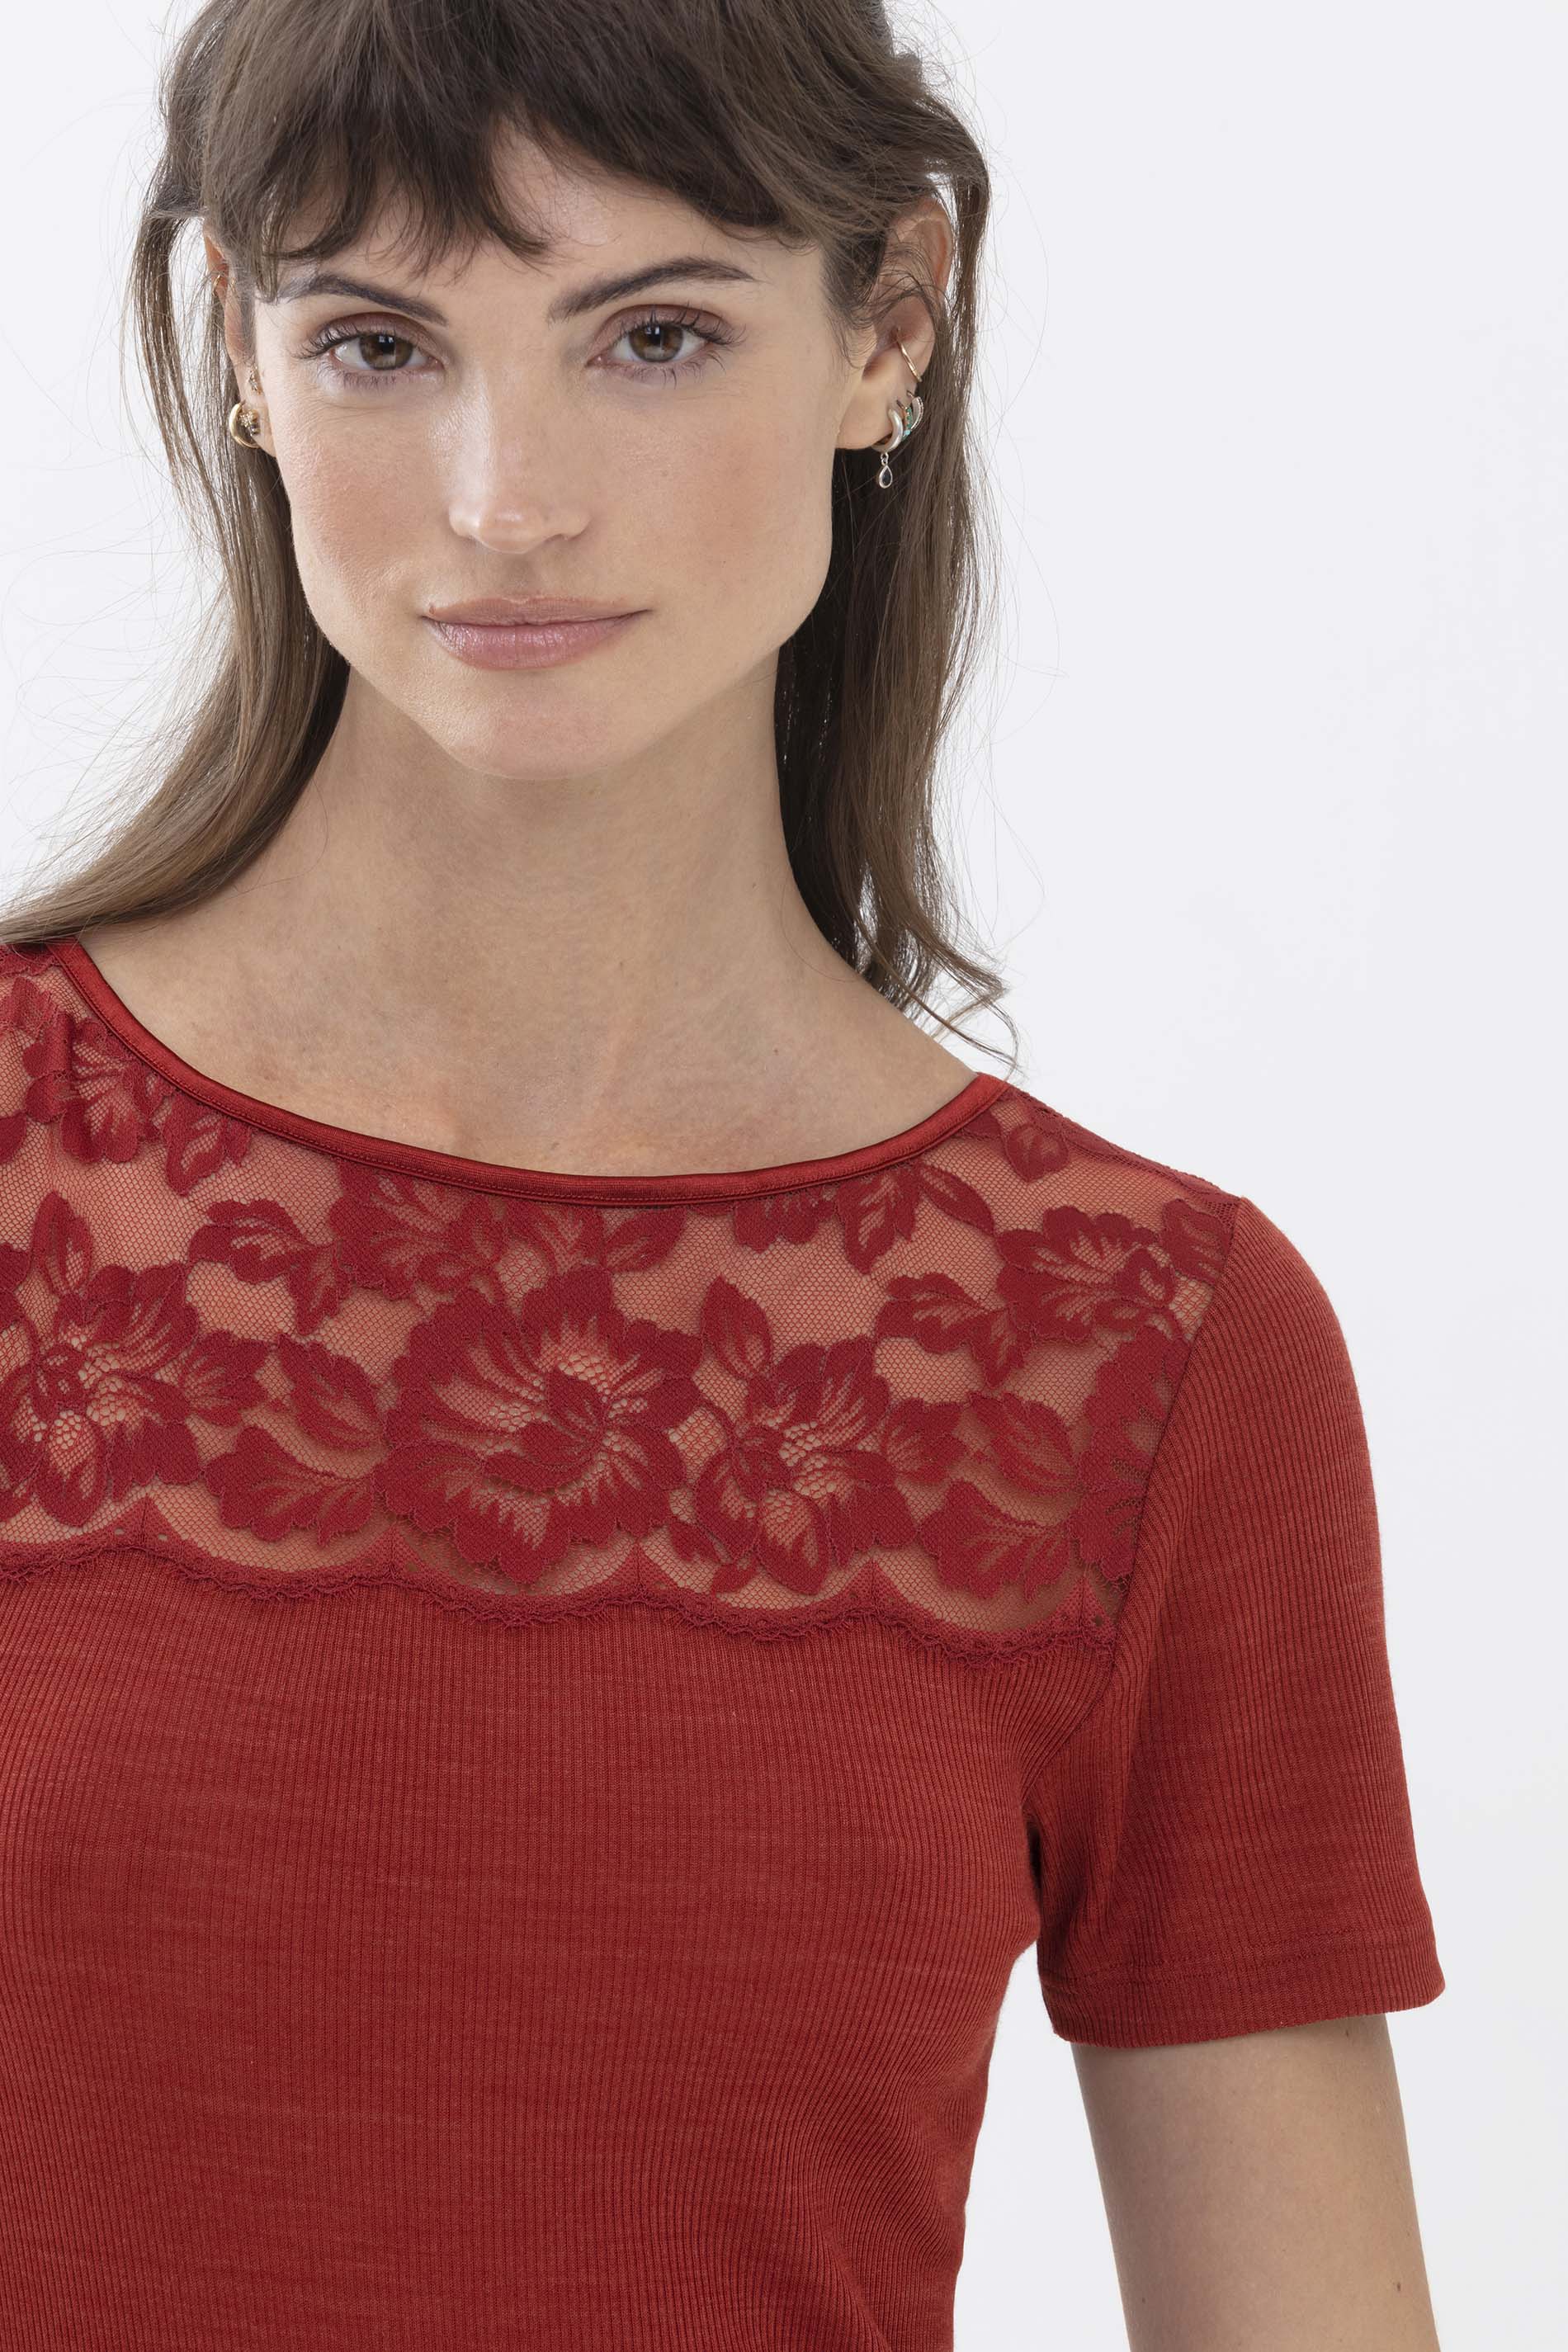 Kurzarm-Shirt Red Pepper Serie Amazing Silk Rib Detailansicht 01 | mey®